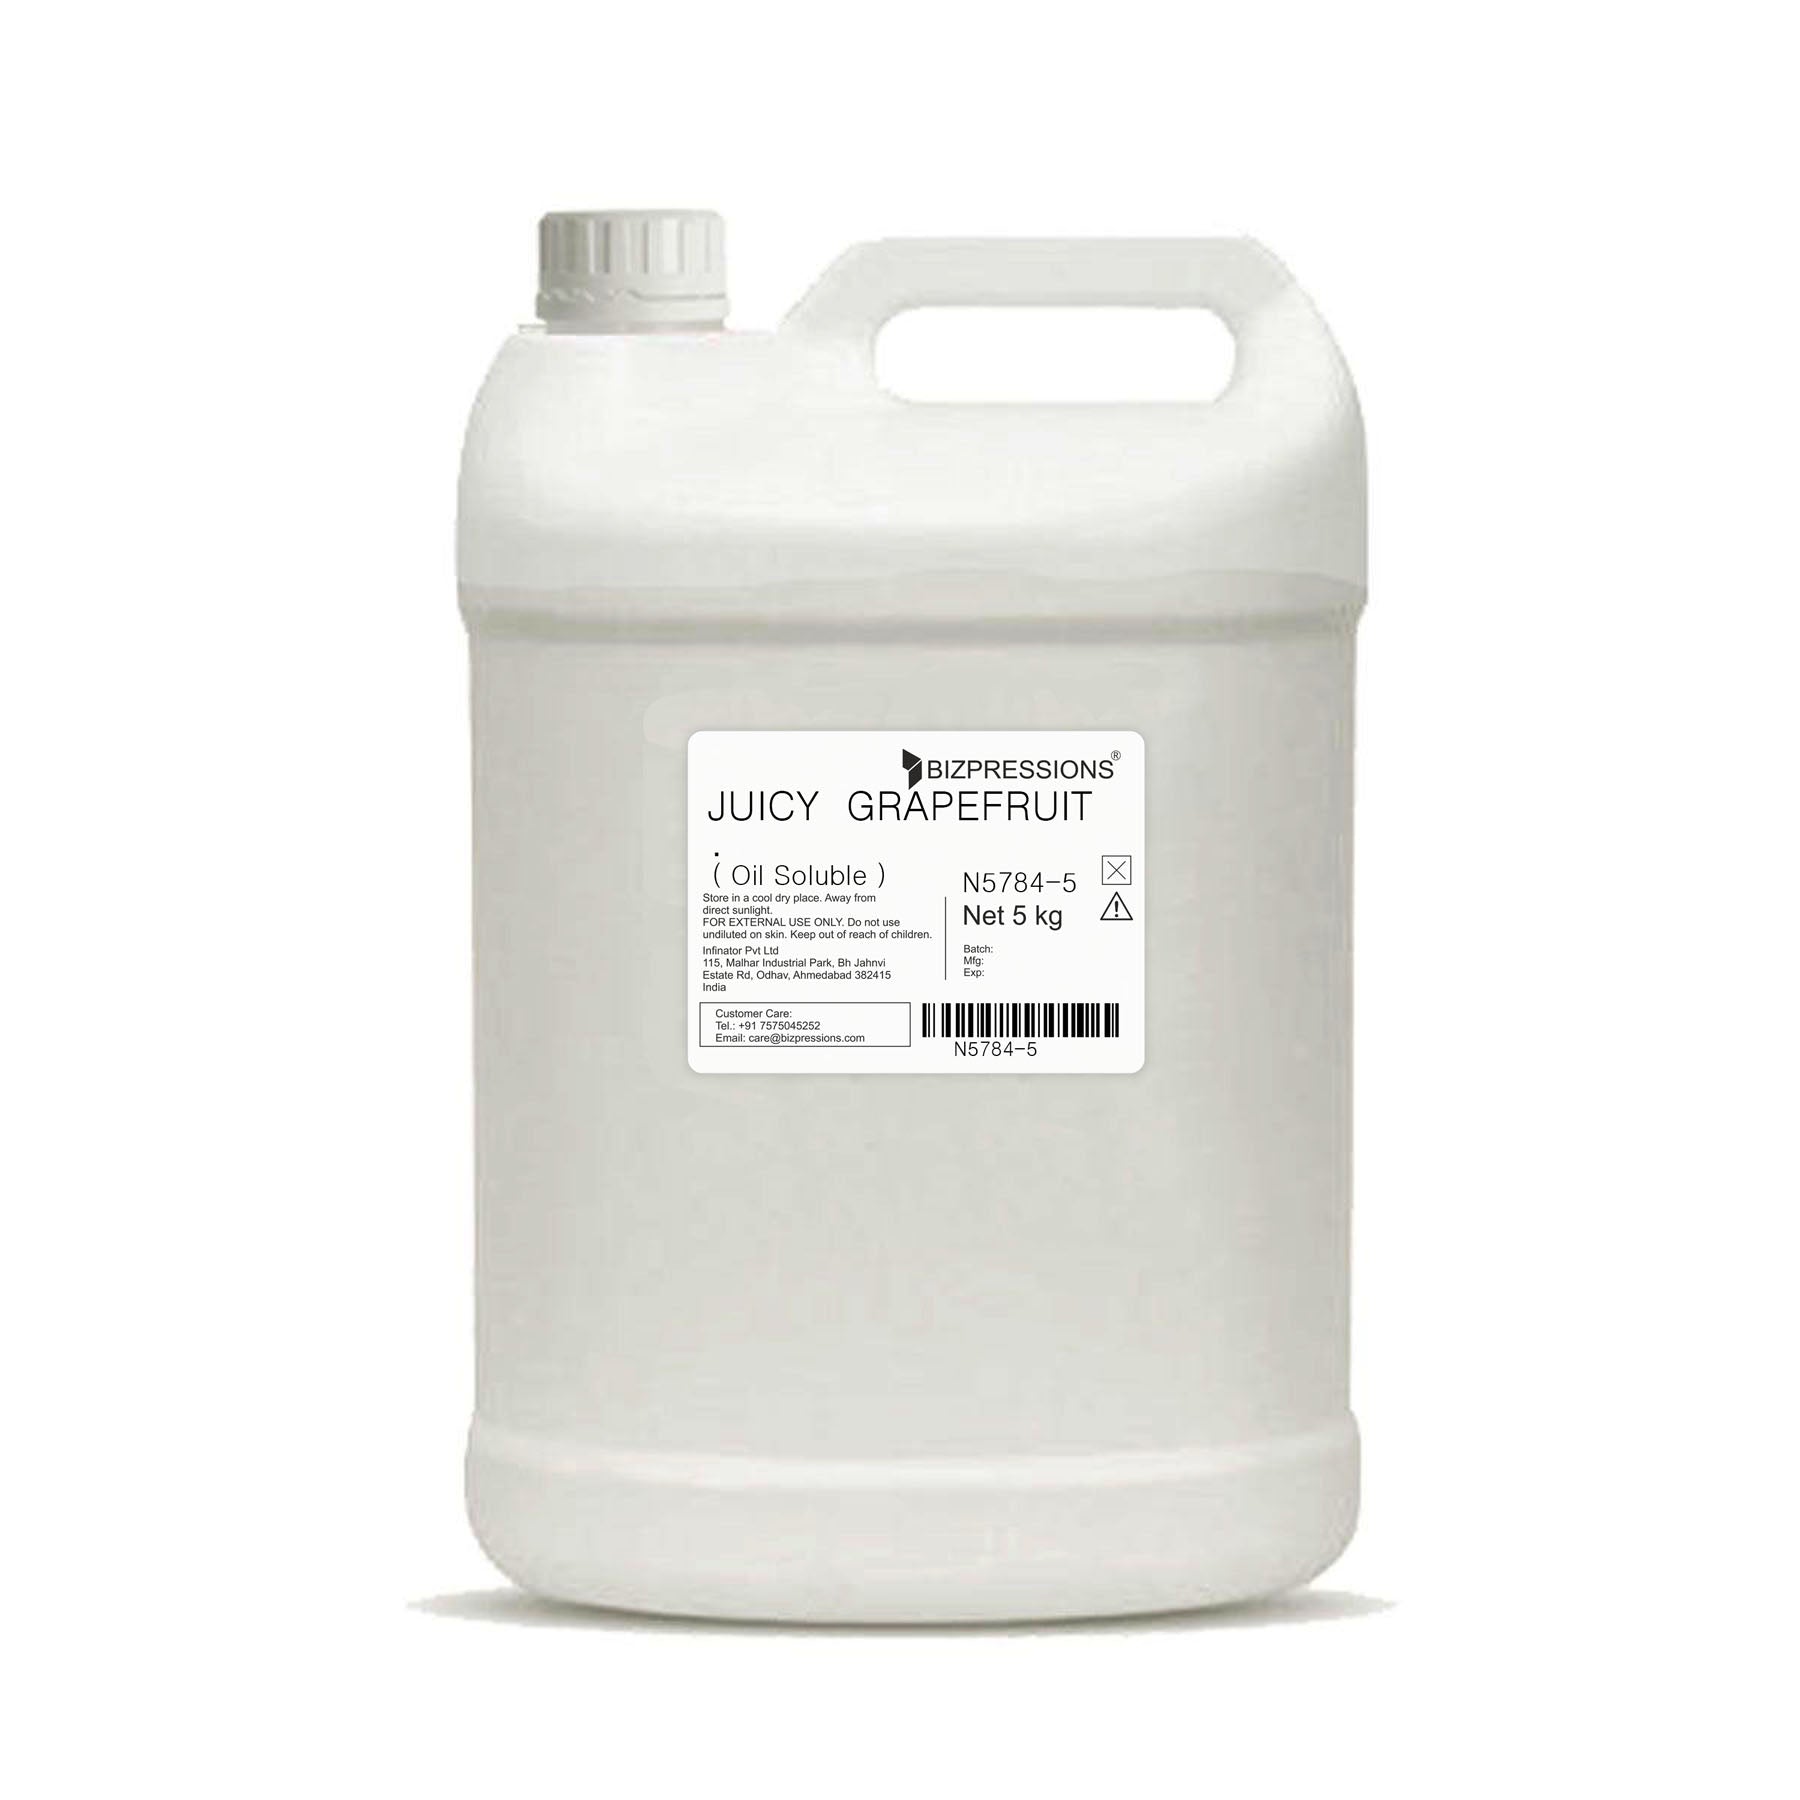 JUICY GRAPEFRUIT - Fragrance ( Oil Soluble ) - 5 kg